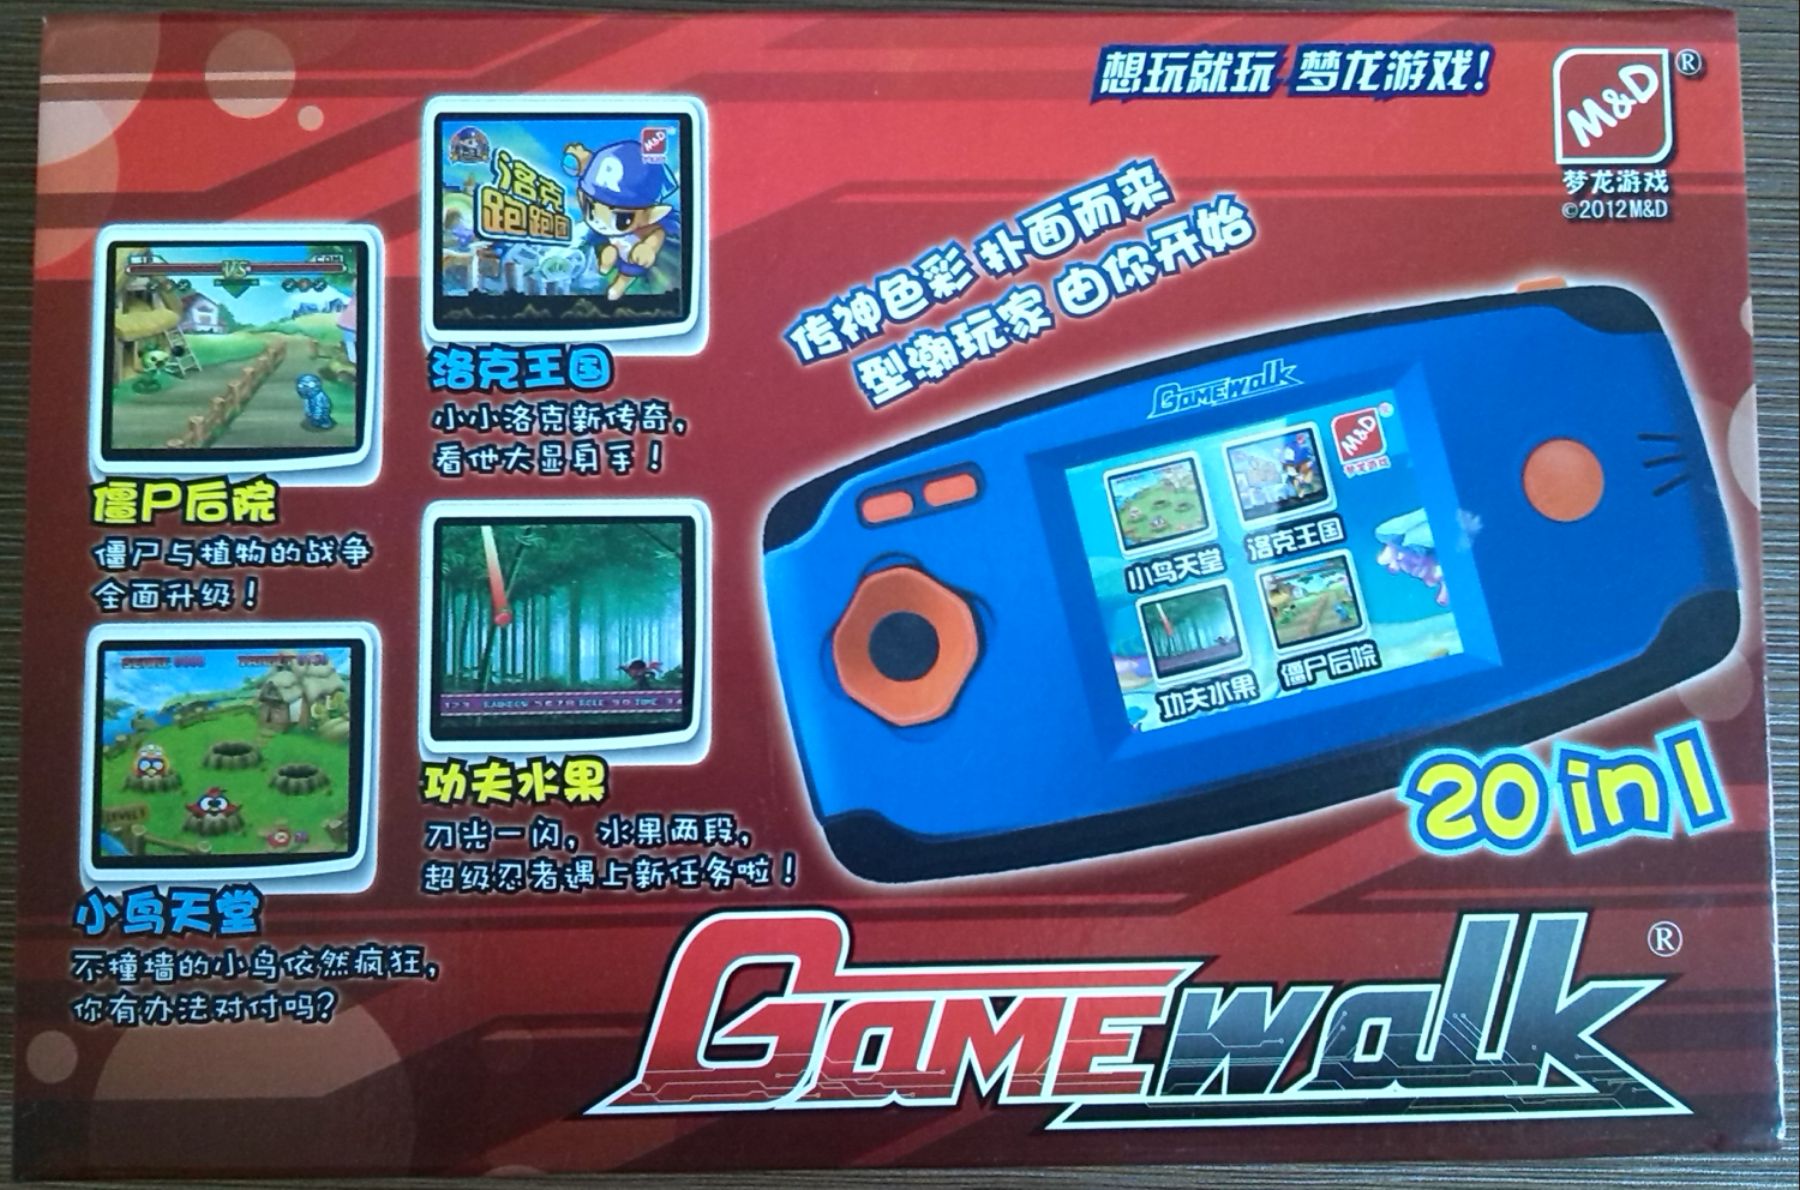 梦龙彩色游戏机GameWalk1.8 洛克王国20IN1